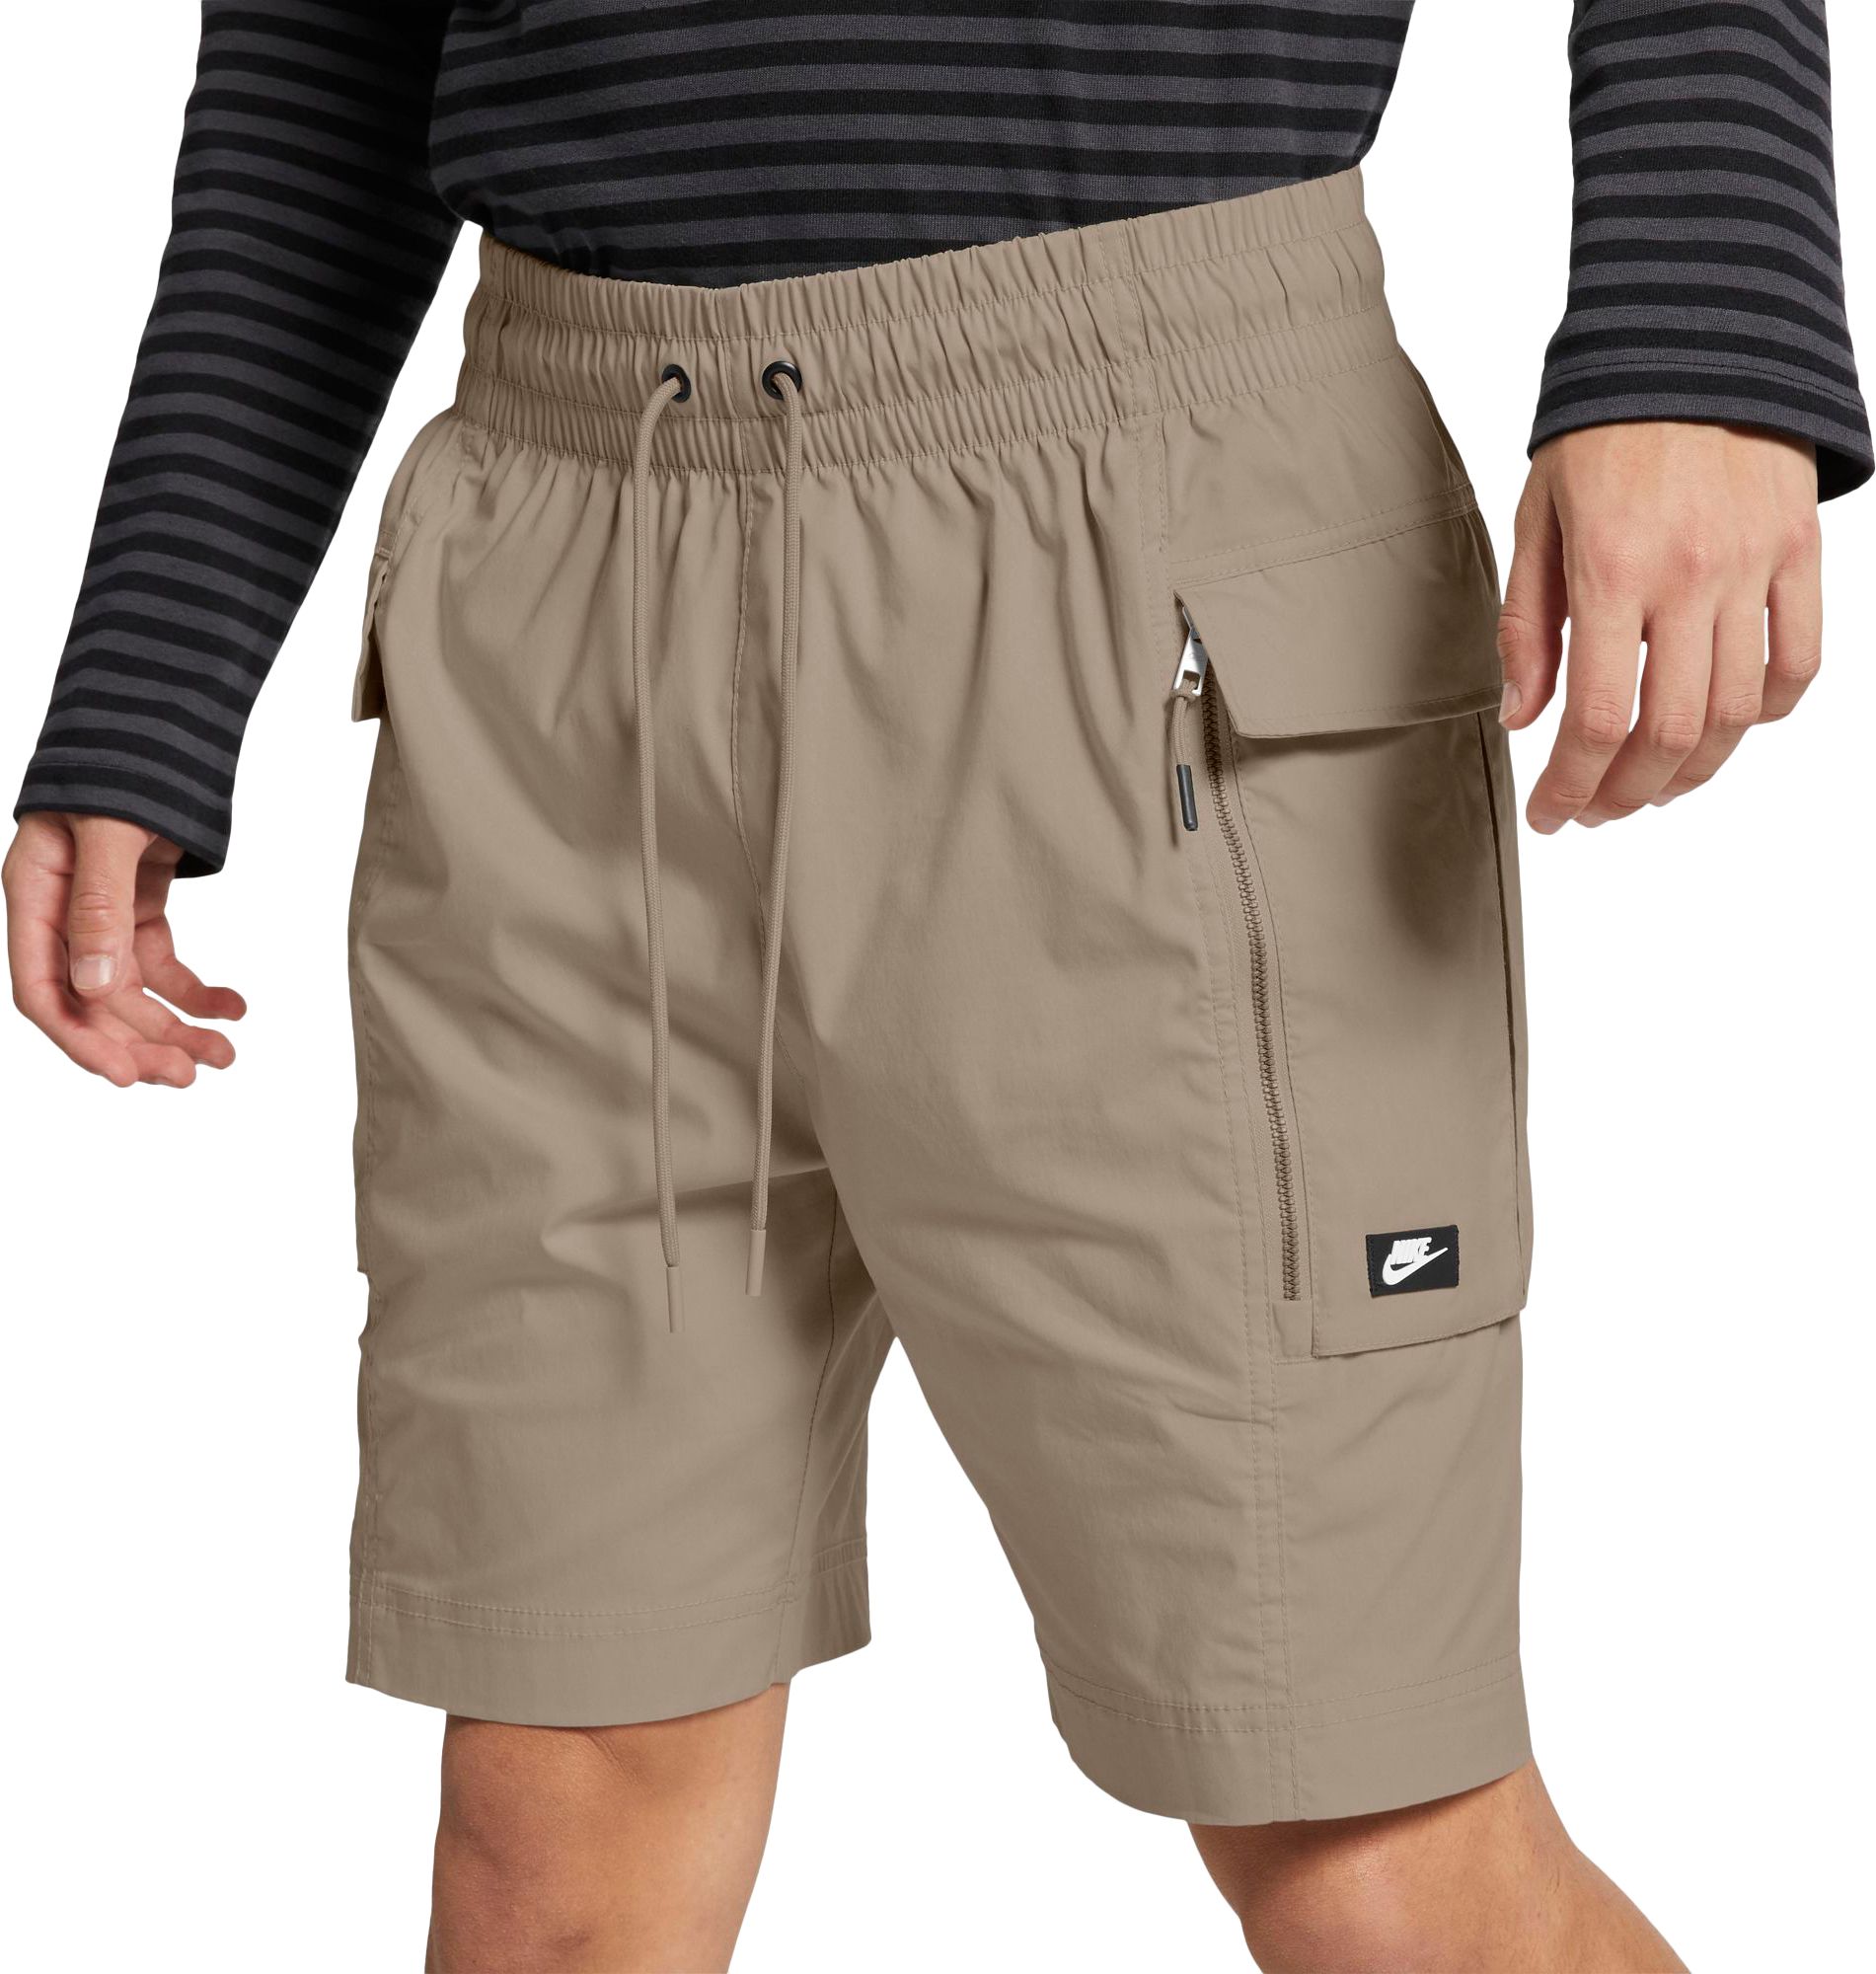 mens nike shorts with zipper pockets